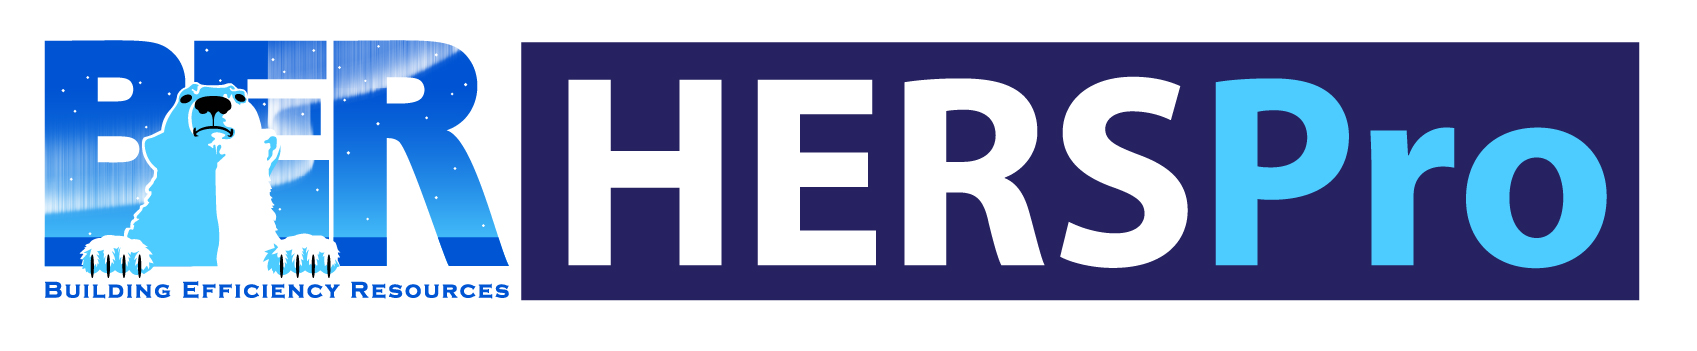 BER_HERSPro_logo@2x-100